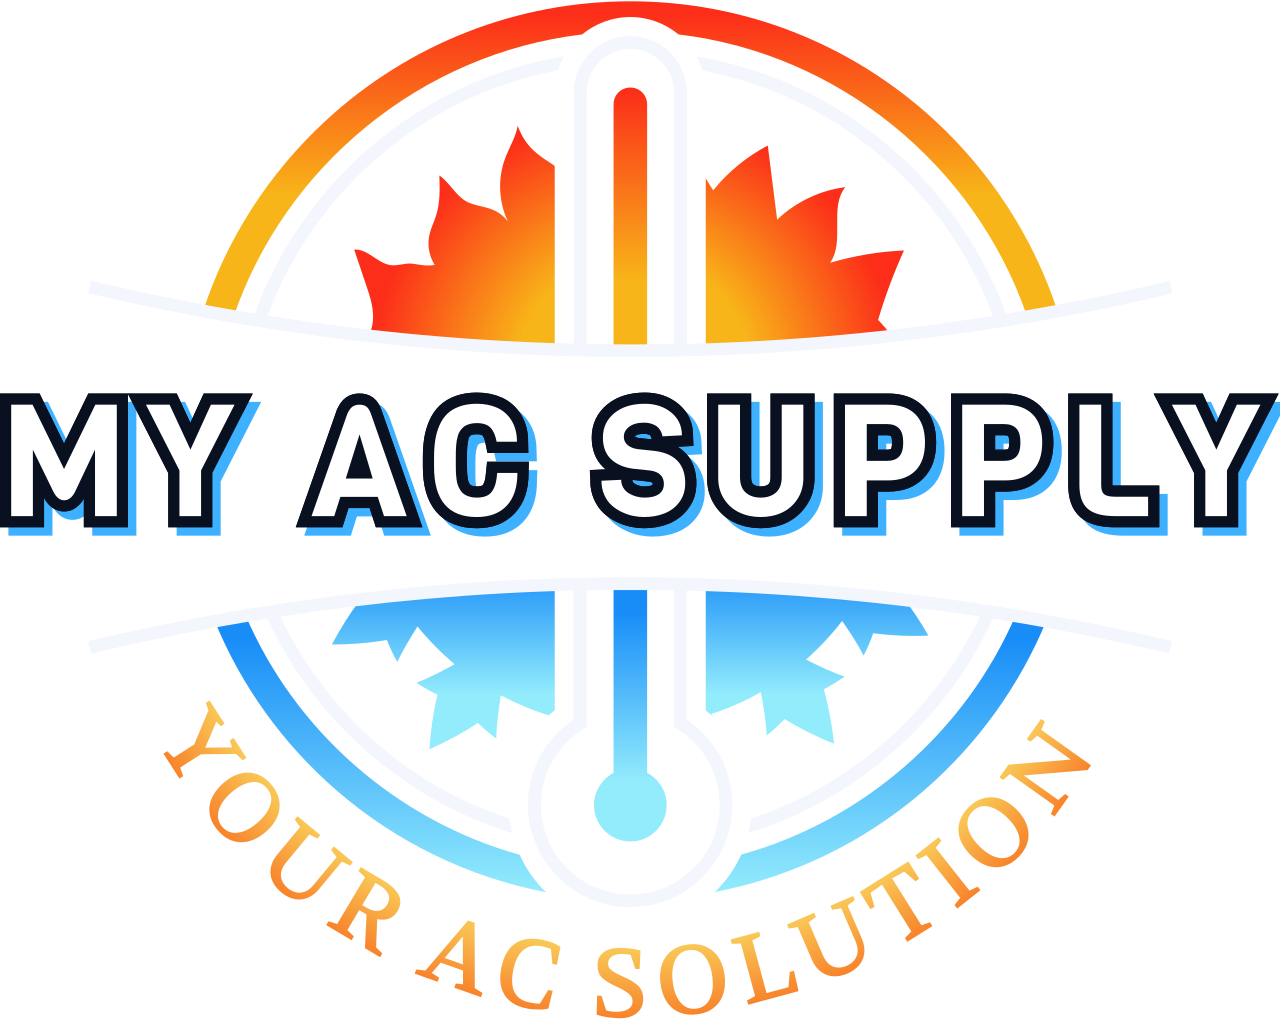 My AC Supply's logo